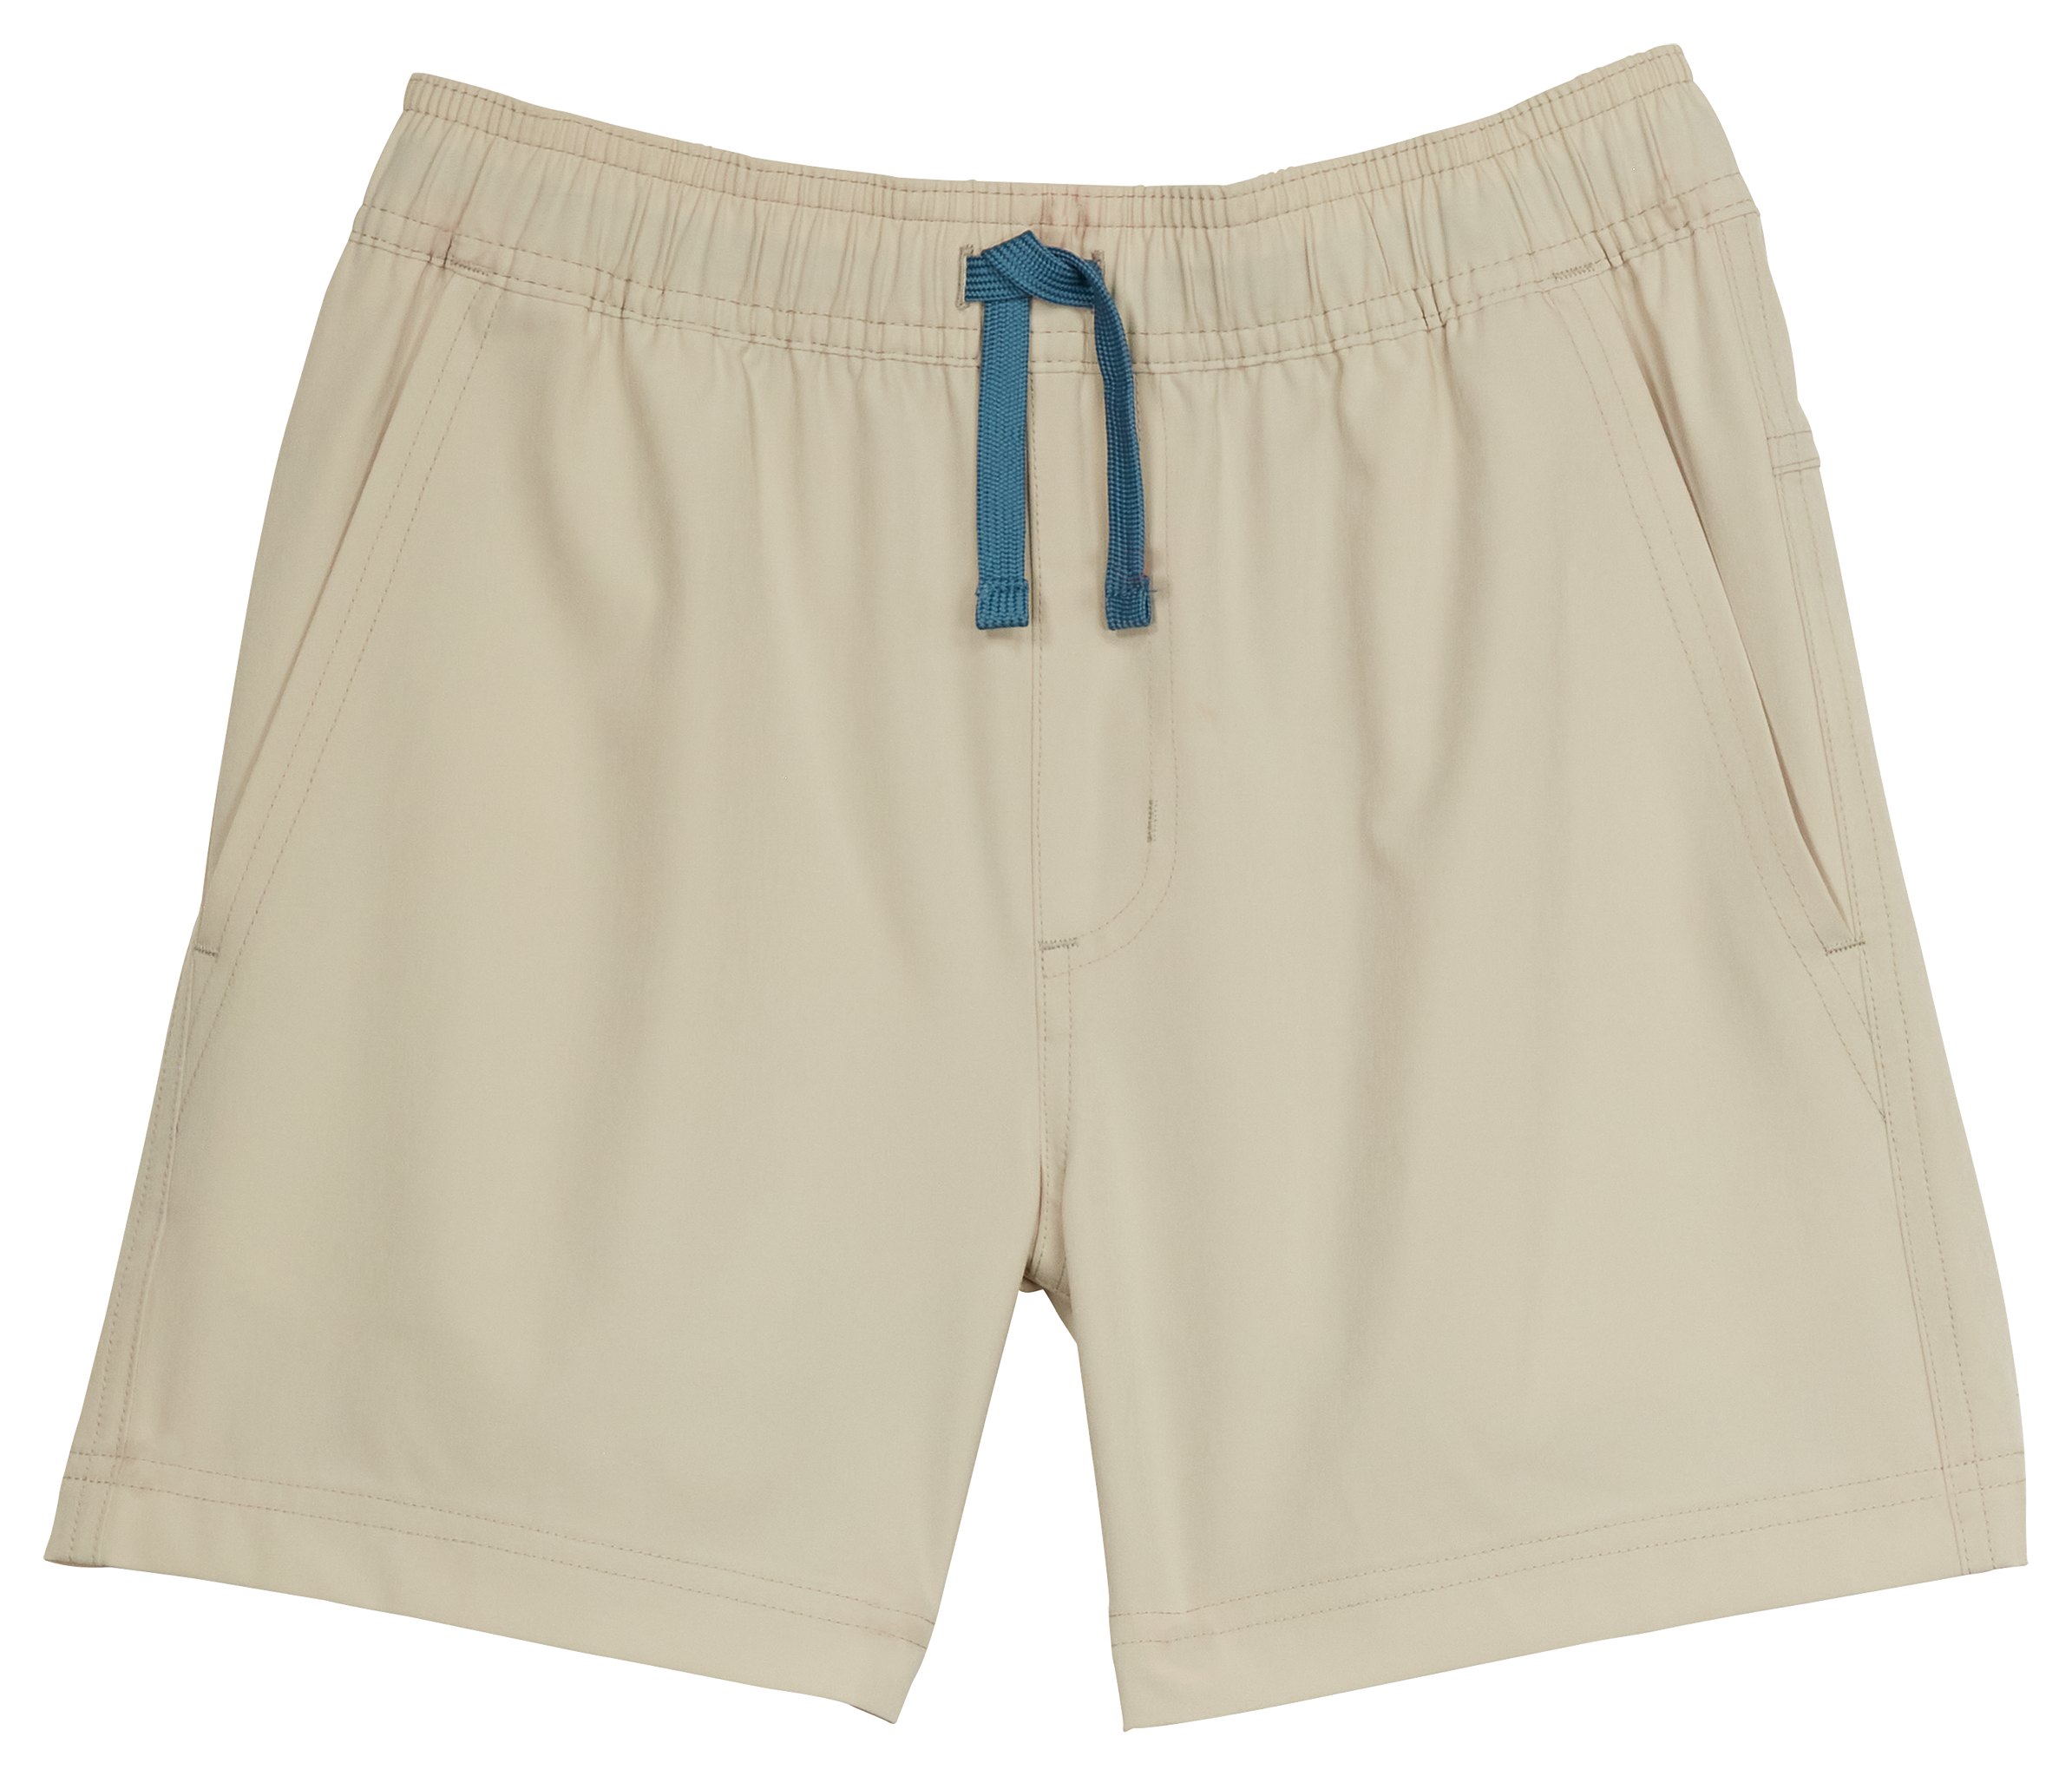 World Wide Sportsman Charter 3-Pocket Pull-On Shorts for Kids - Peyote - L